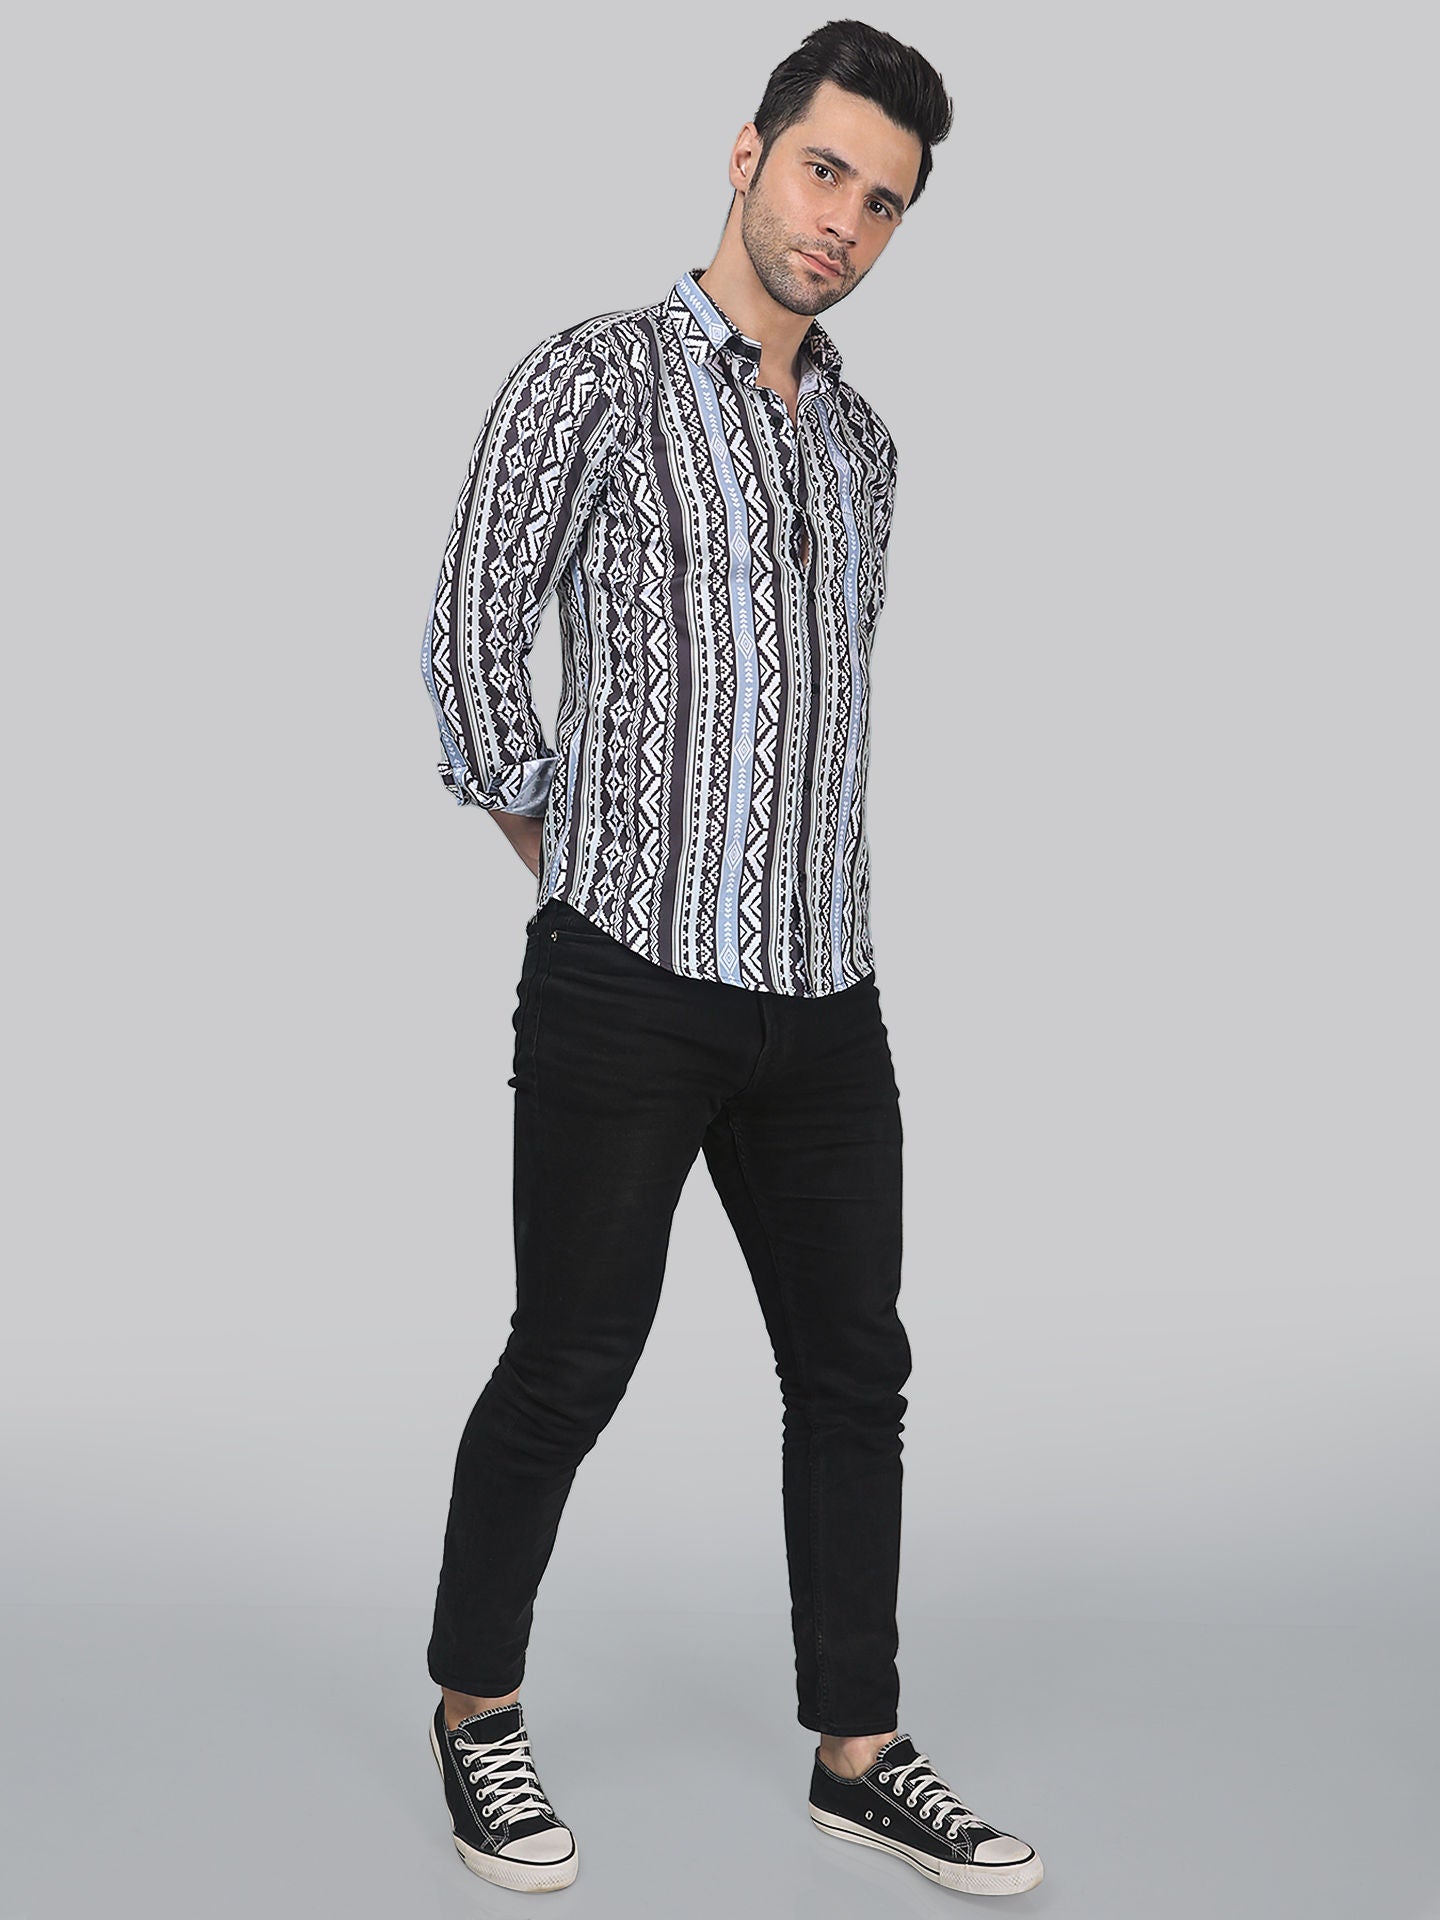 Whimsical Men's Printed Full Sleeve Casual Linen Shirt - TryBuy® USA🇺🇸